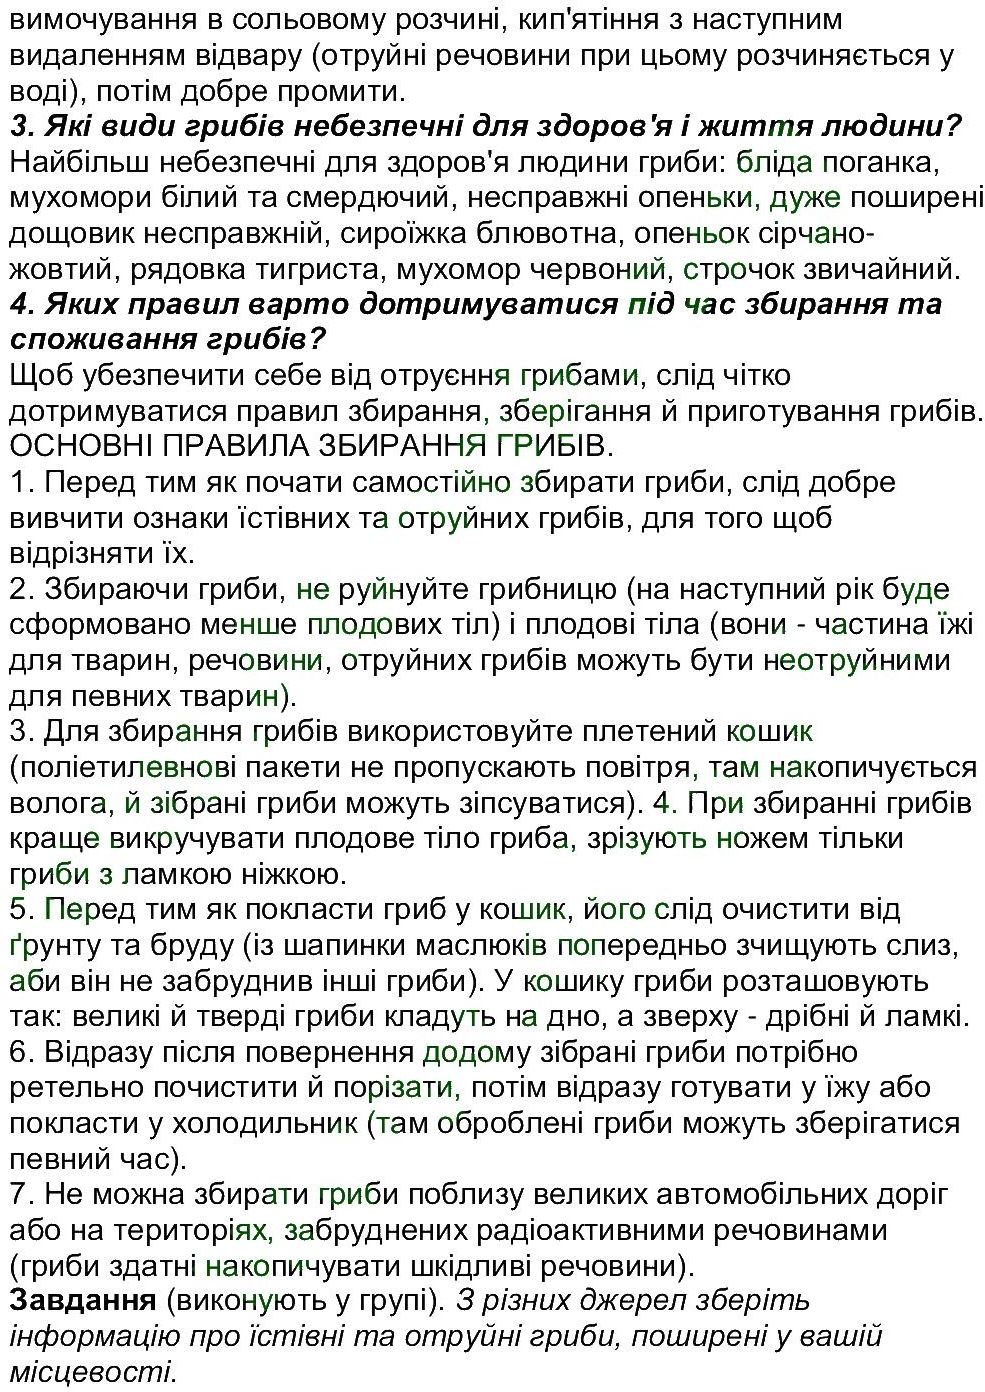 6-biologiya-li-ostapchenko-pg-balan-nyu-matyash-2016--tema-5-gribi-ст206-212-rnd4993.jpg